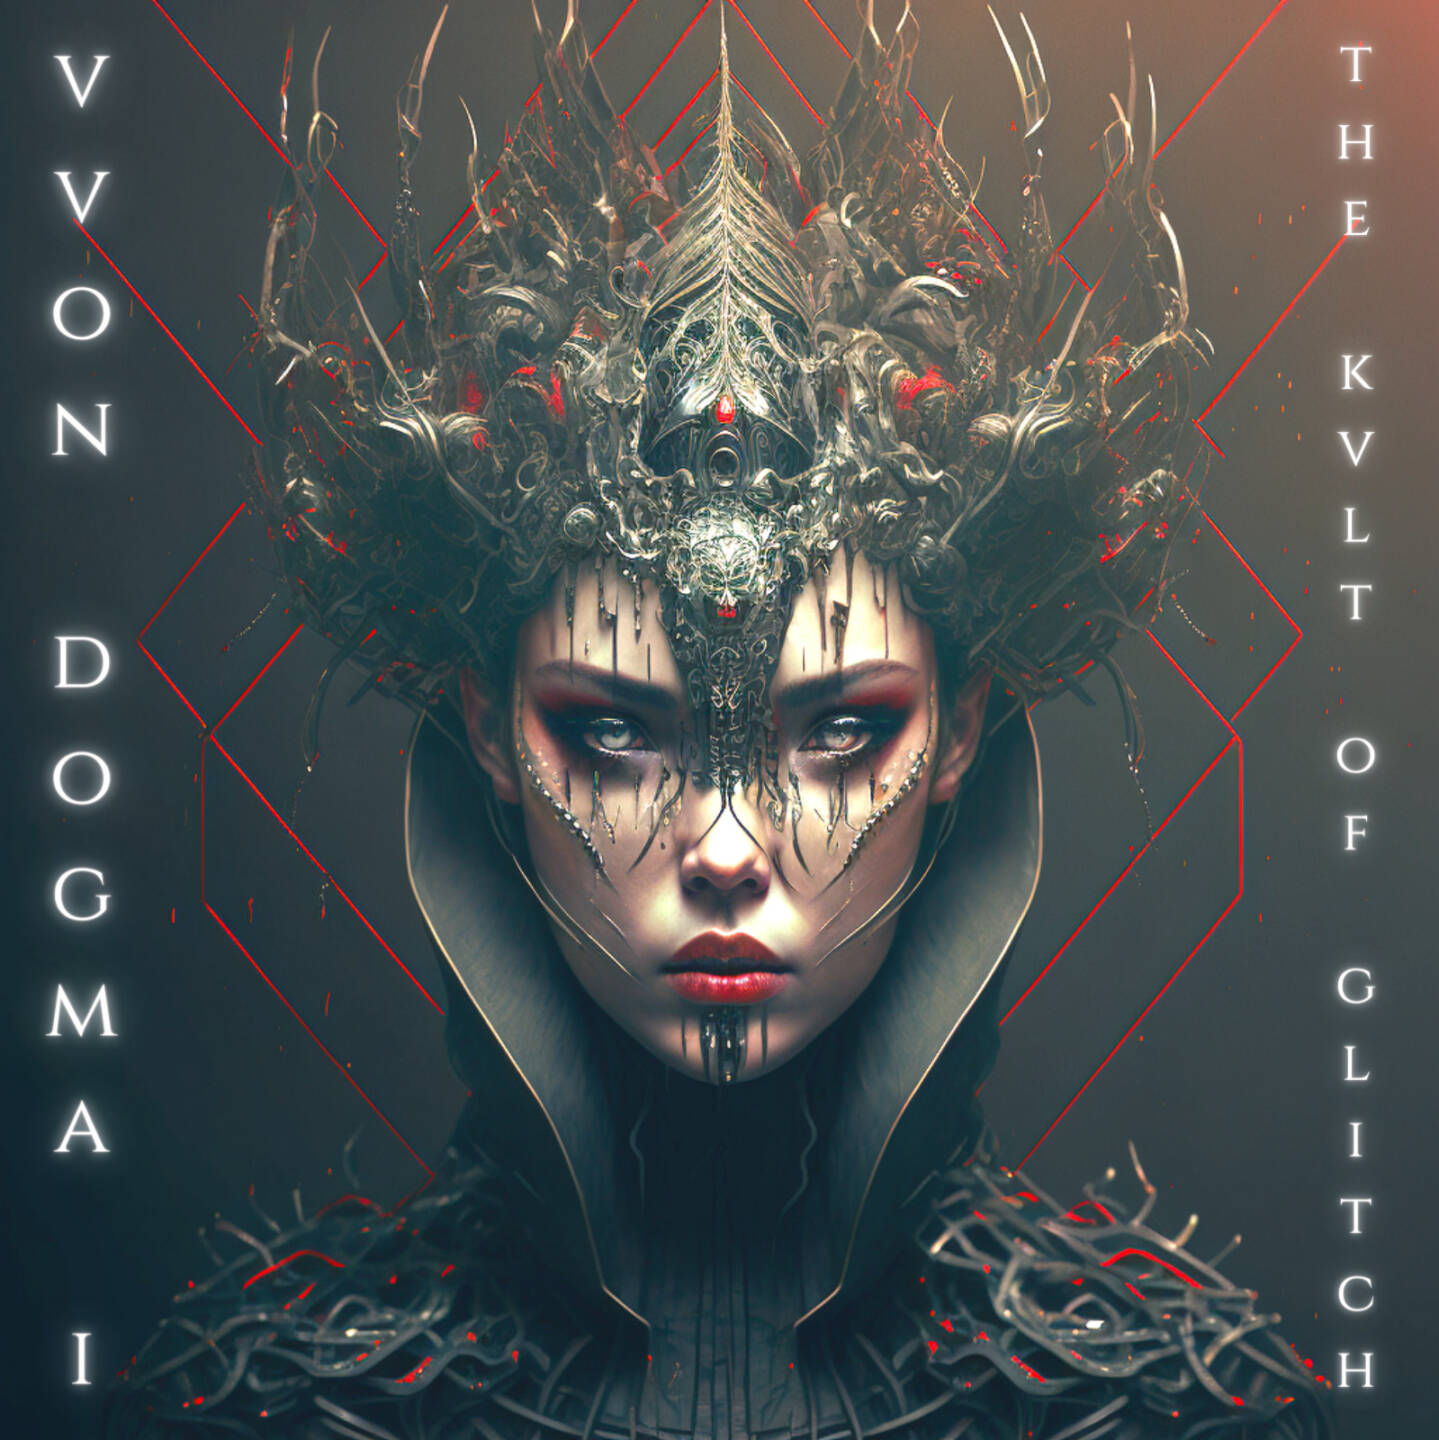 Vvon Dogma I (ex-Unexpect) unleashes debut album The Kvlt of Glitch